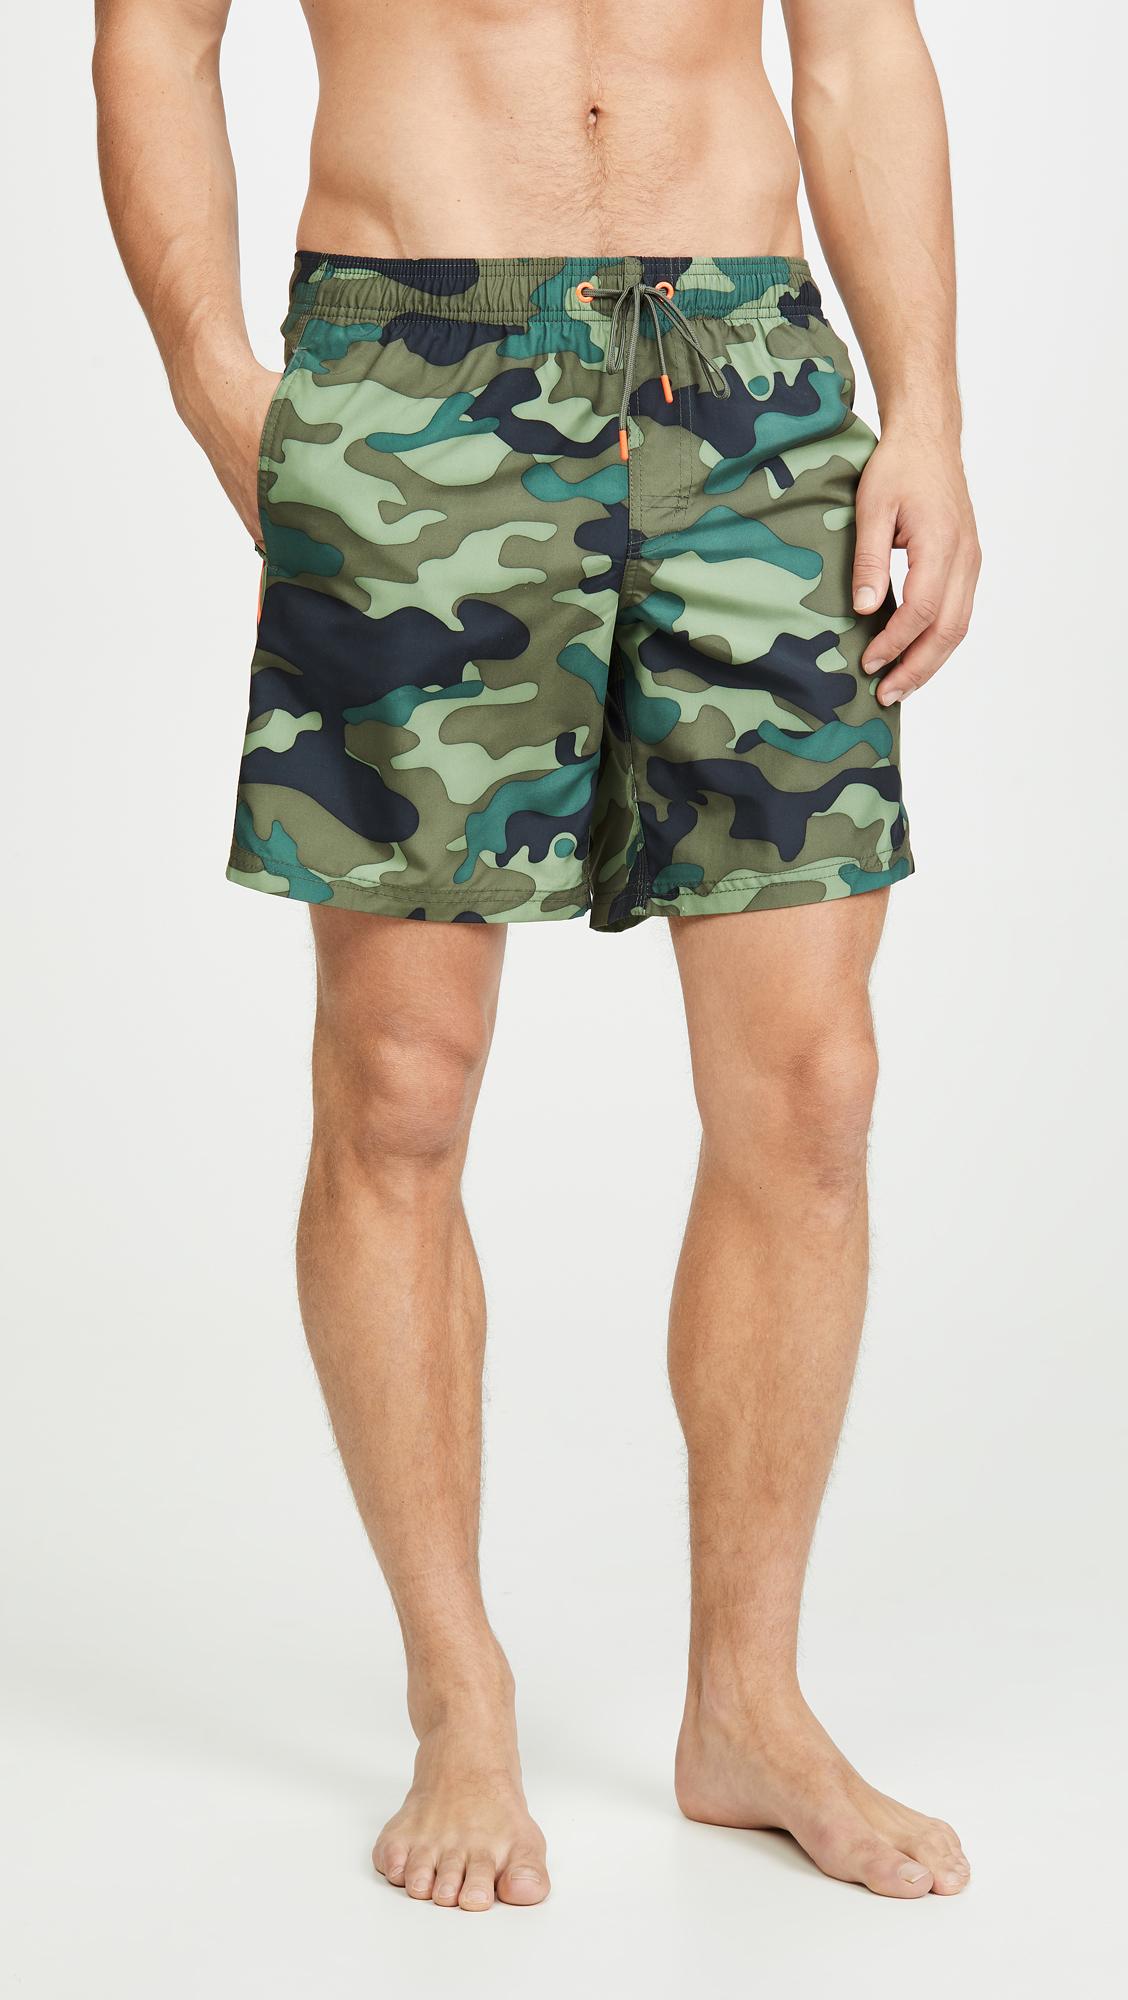 Sundek Camouflage Swim Shorts With Elastic Waist in Green for Men - Lyst